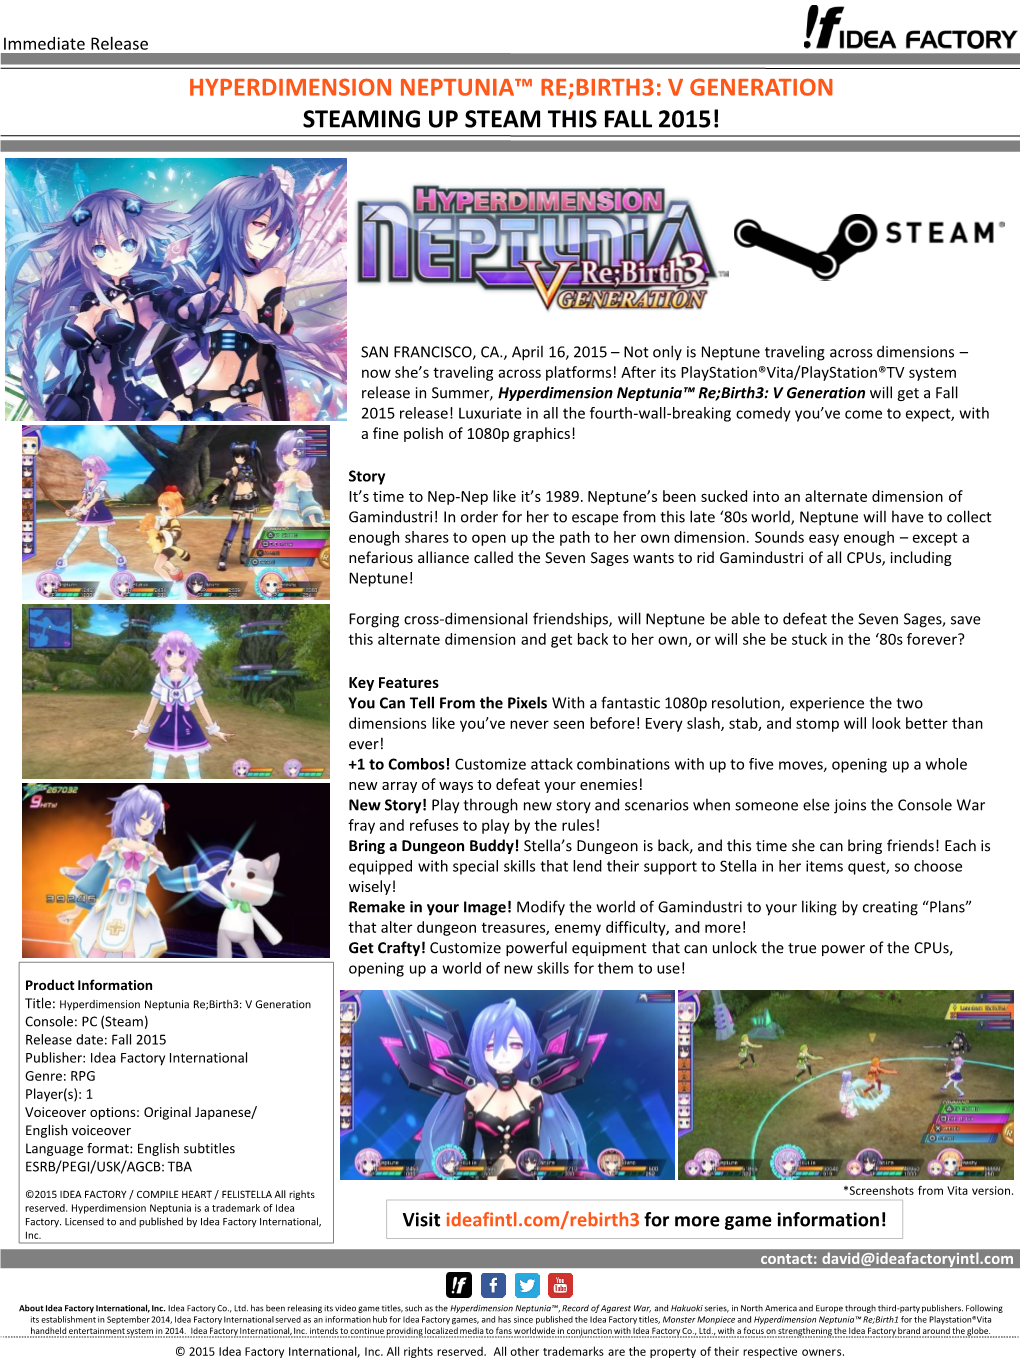 Hyperdimension Neptunia™ Re;Birth3: V Generation Steaming up Steam This Fall 2015!